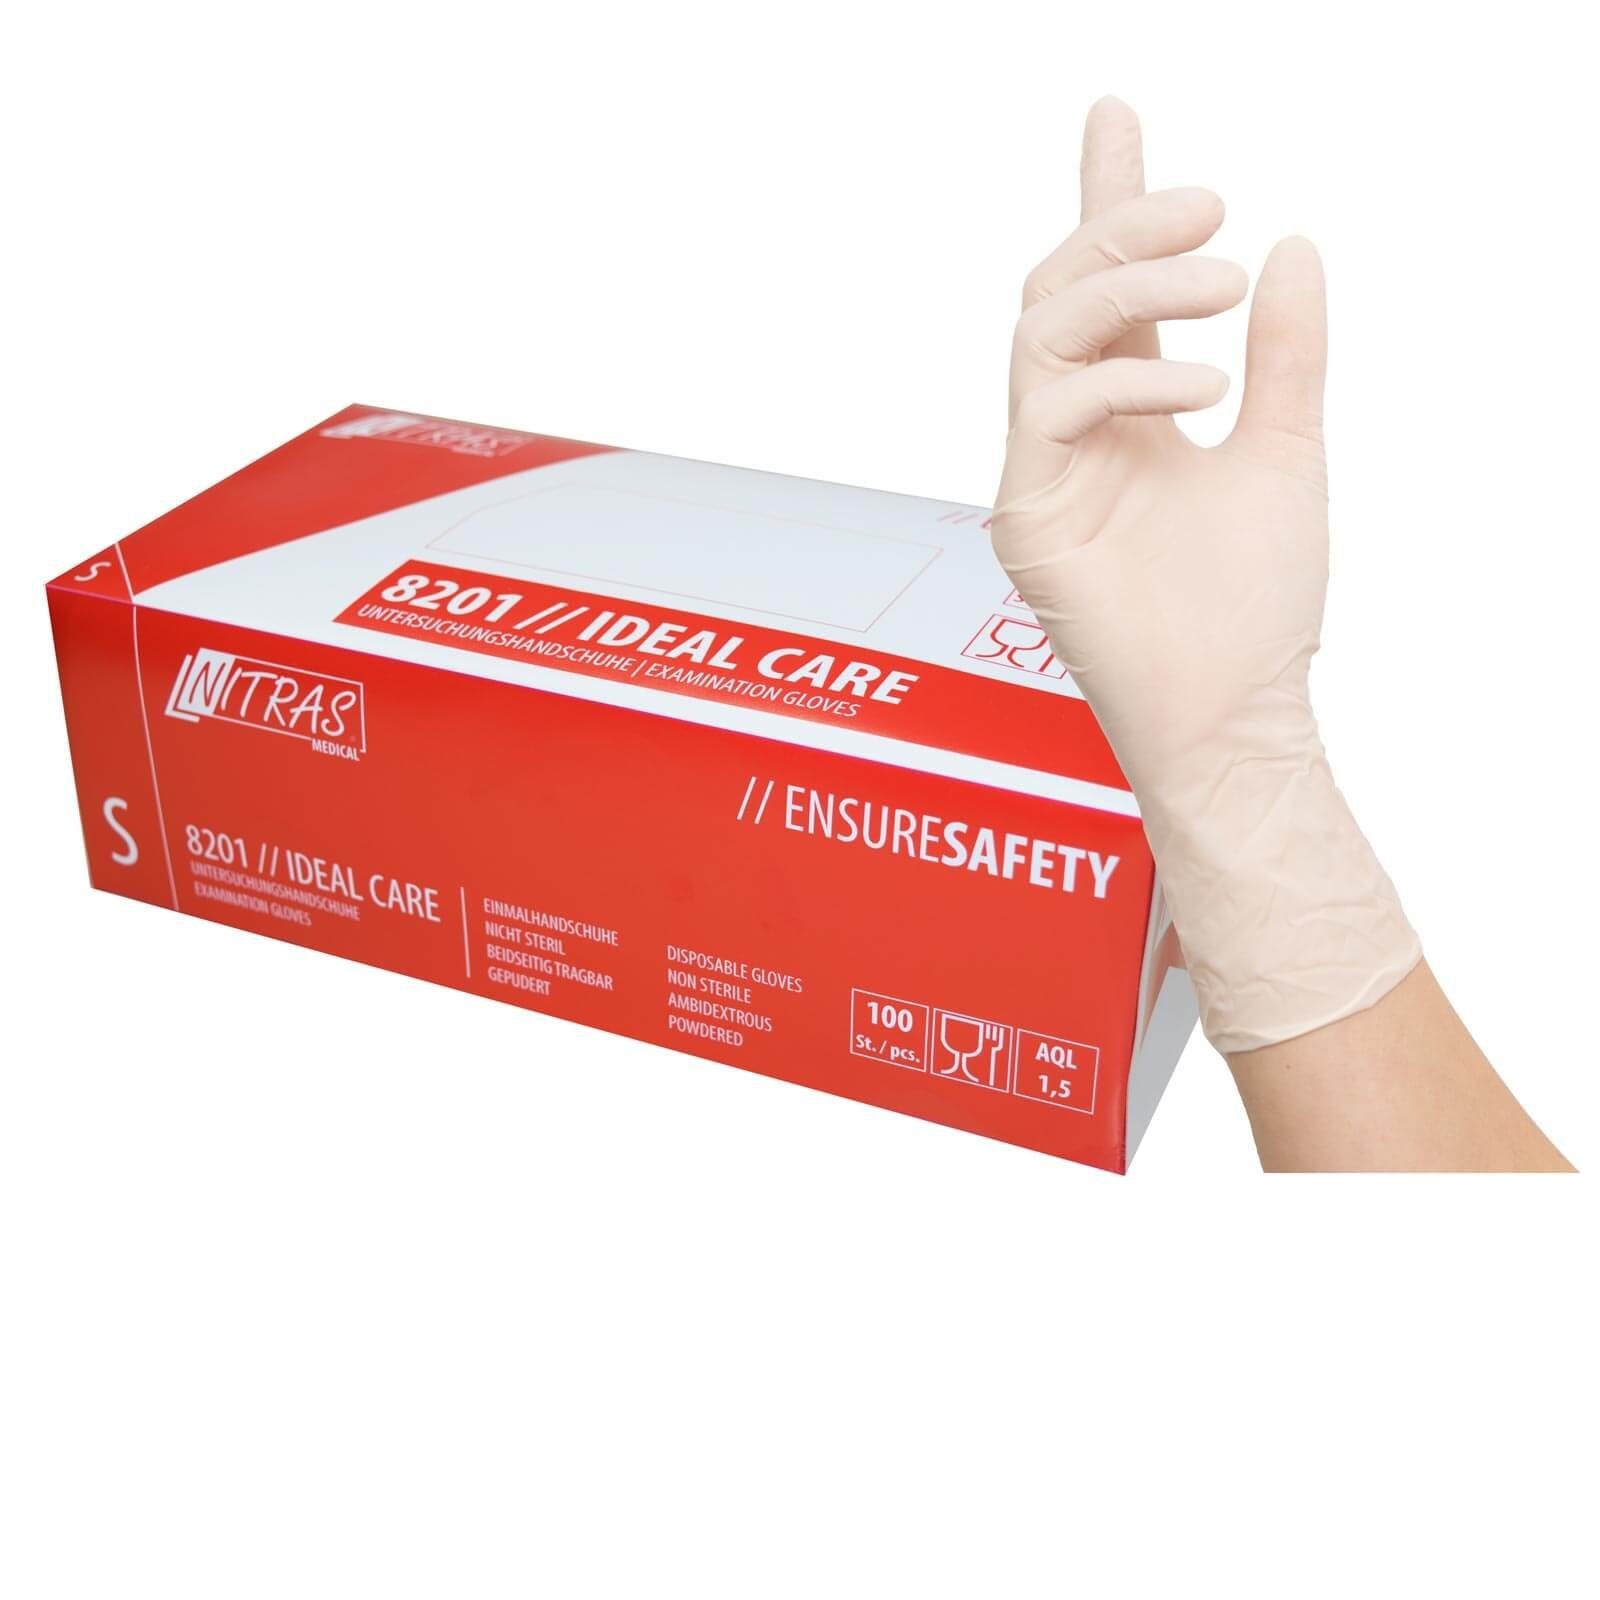 Nitras Medical Einweghandschuhe Einmalhandschuhe, 8201 100 NITRAS Ideal Handschuhe, (Spar-Set) Care Stück Latex